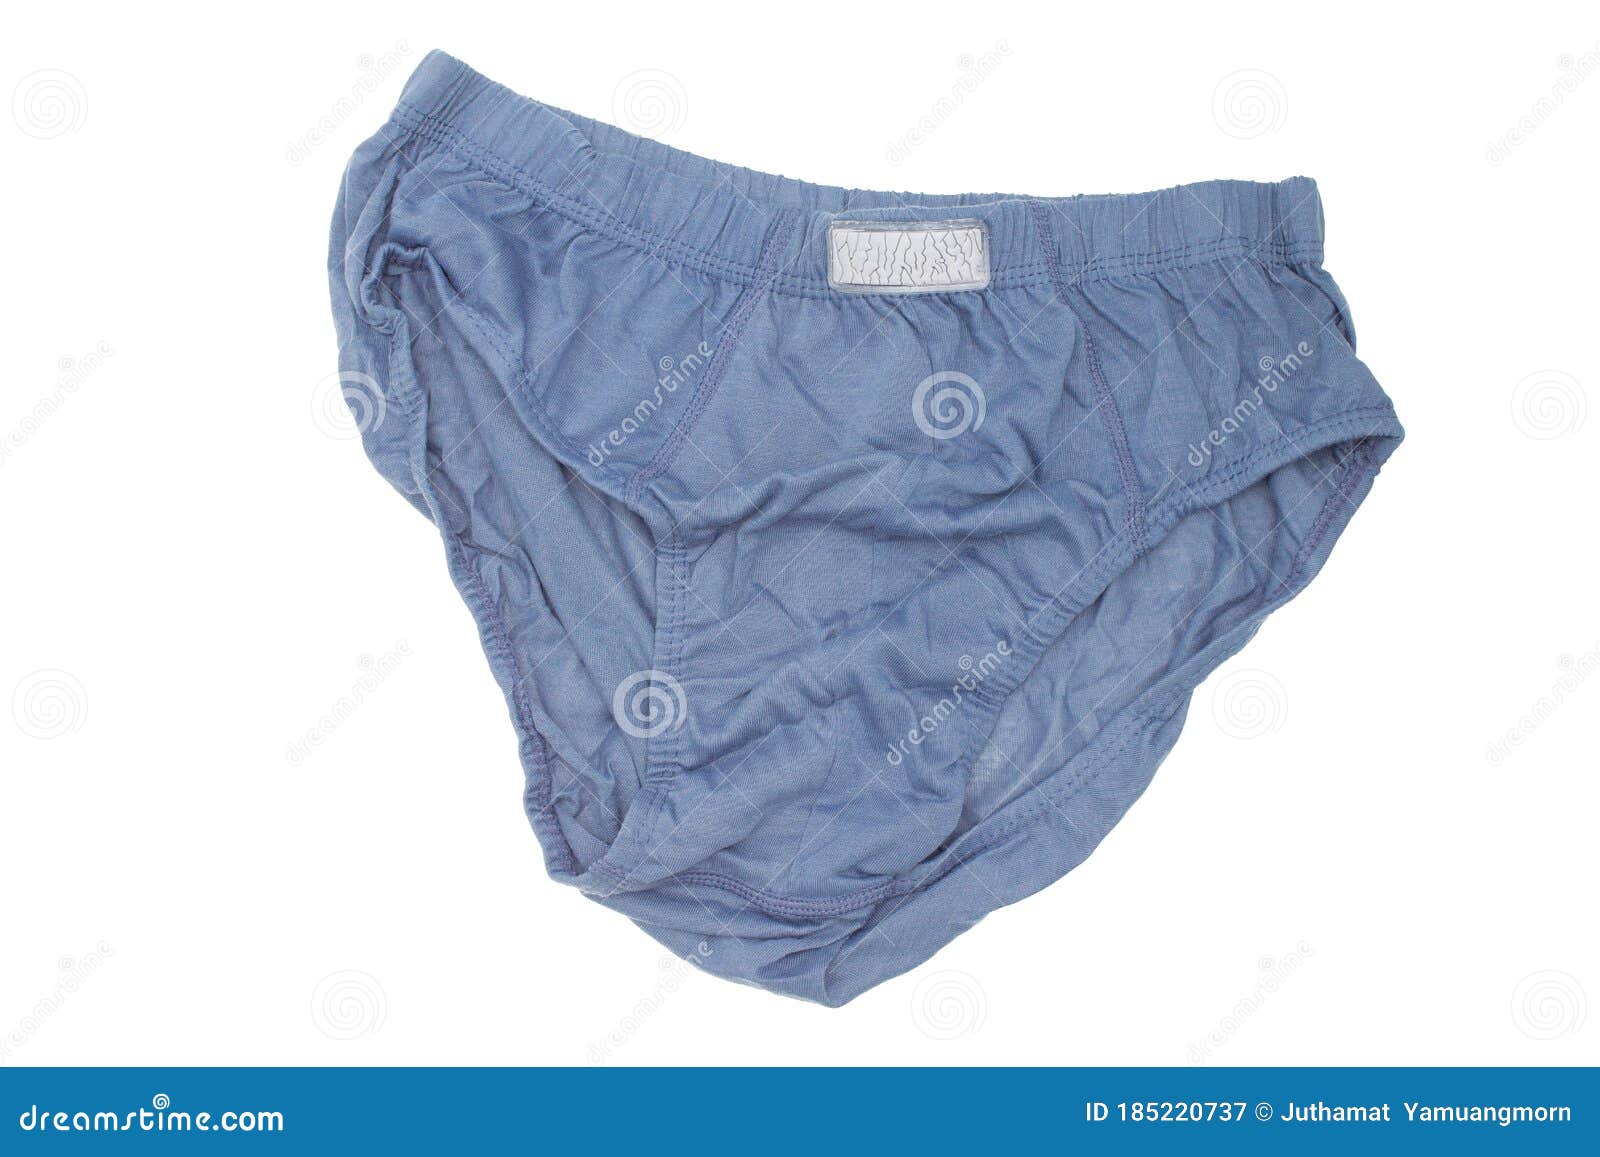 Blue Of Men Underwear Isolated White Background Stock Image - Image of ...